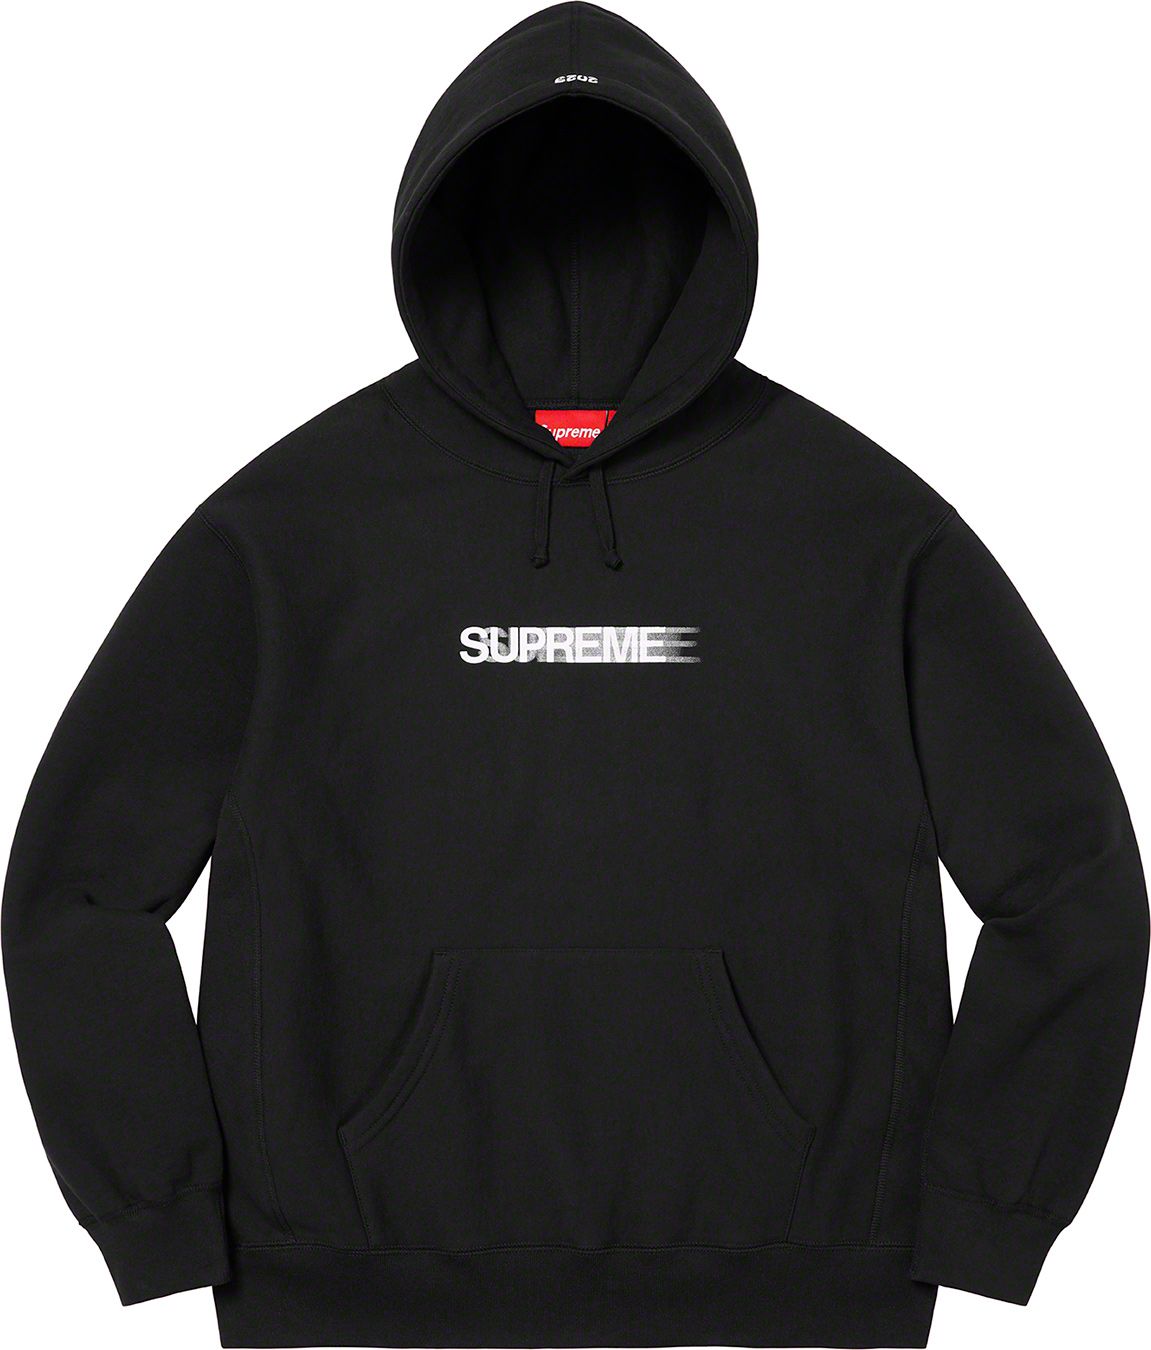 supreme motion logo hooded sweatshirt XL-